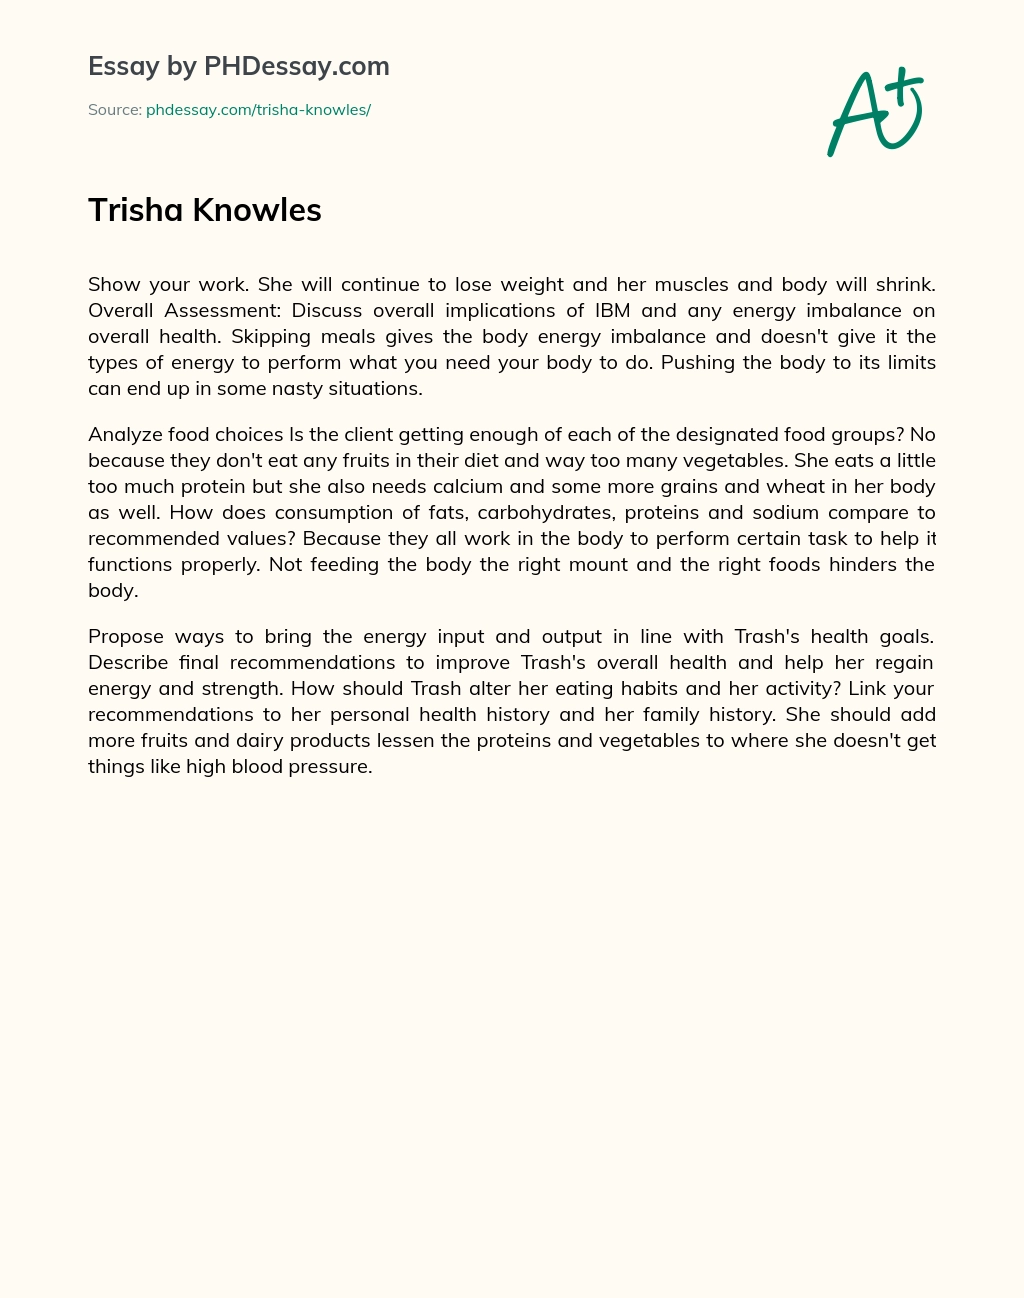 Trisha Knowles essay